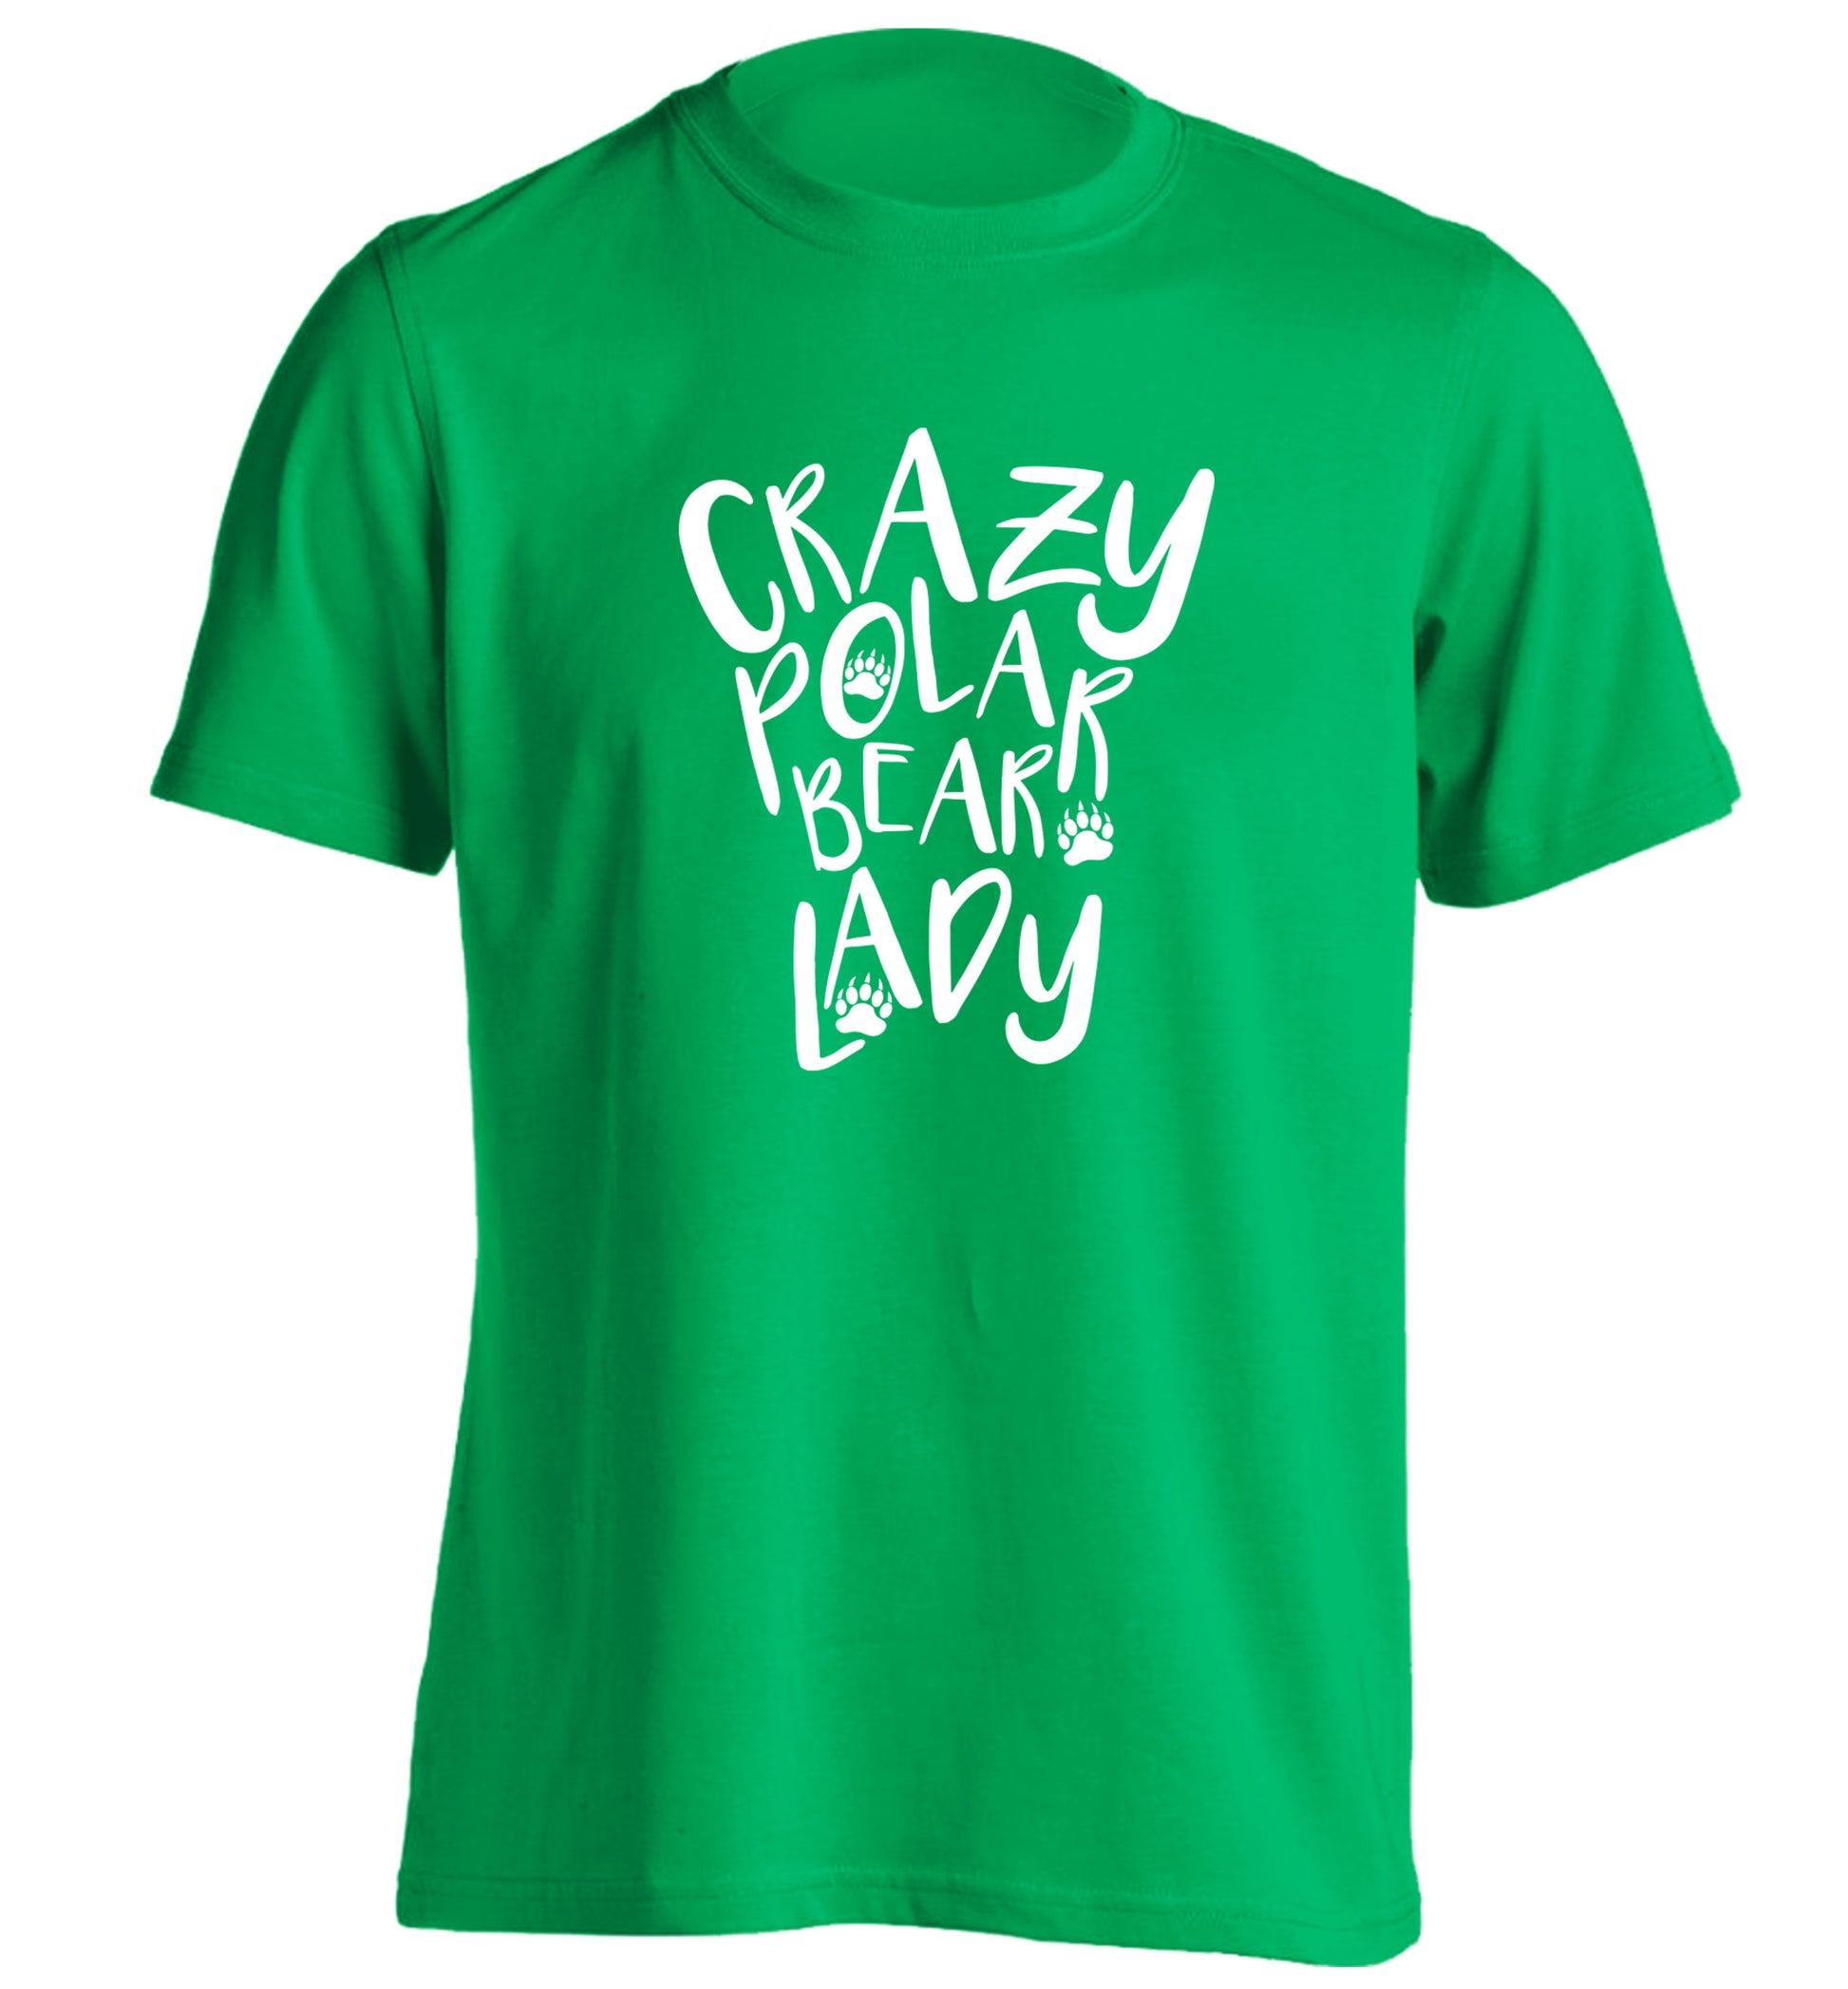 Crazy polar bear lady adults unisex green Tshirt 2XL